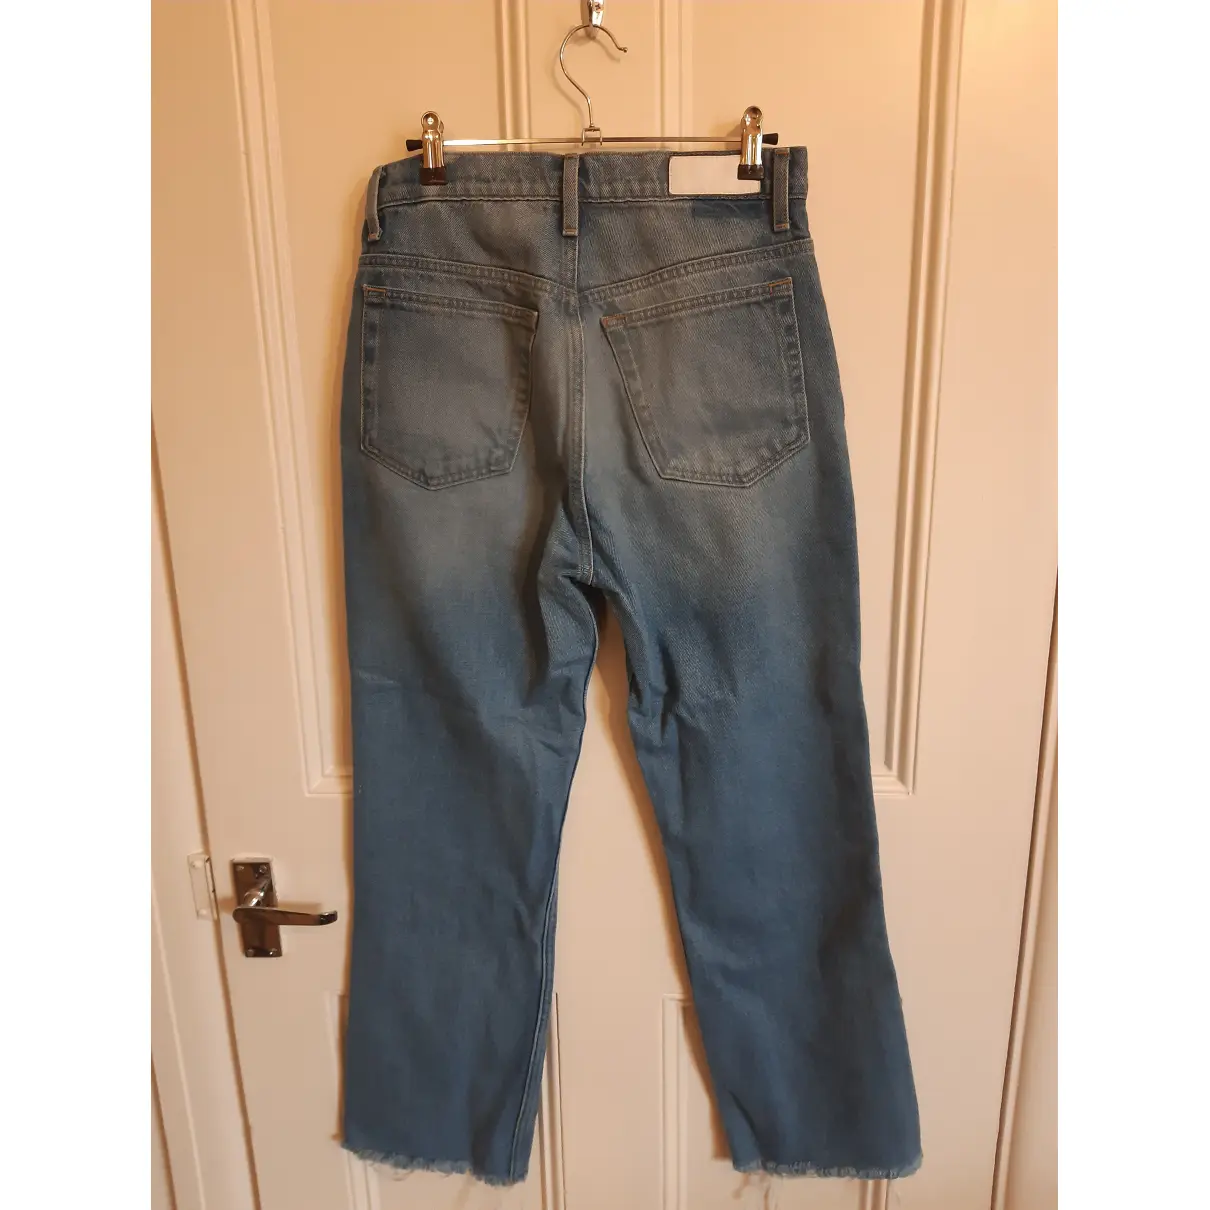 Buy Re/Done Blue Cotton Jeans online